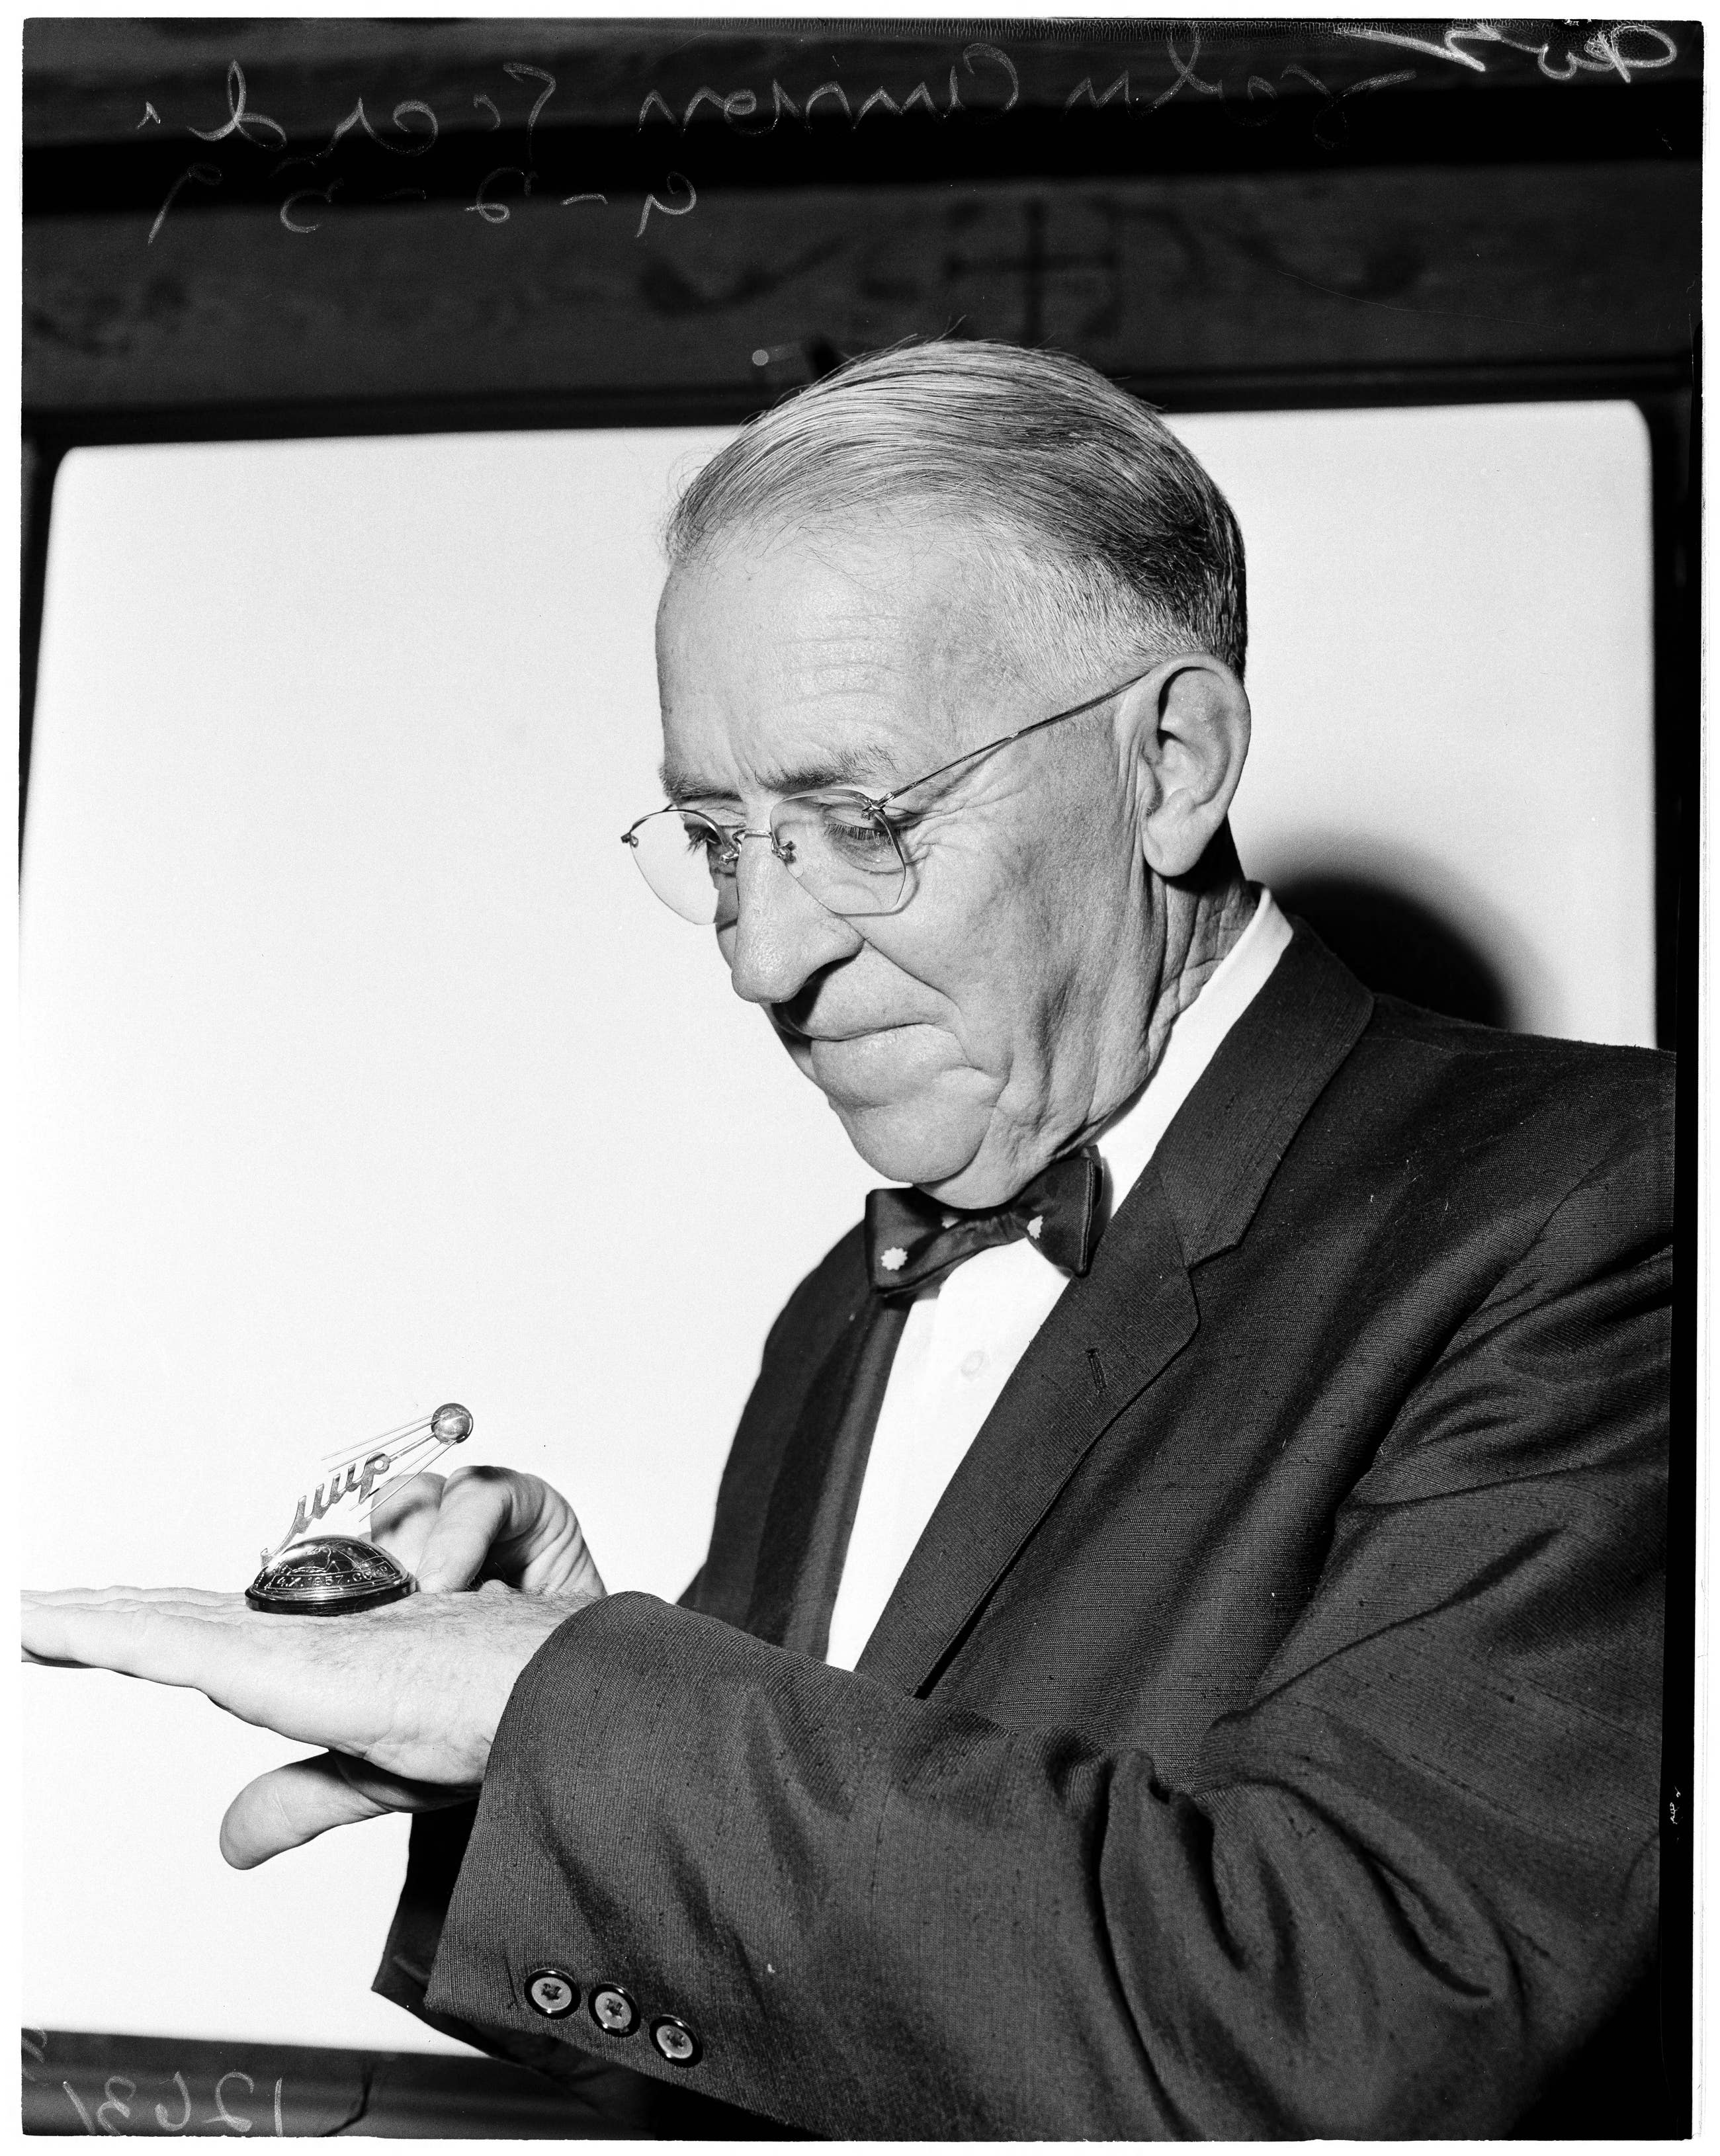 John Anson Ford in 1959